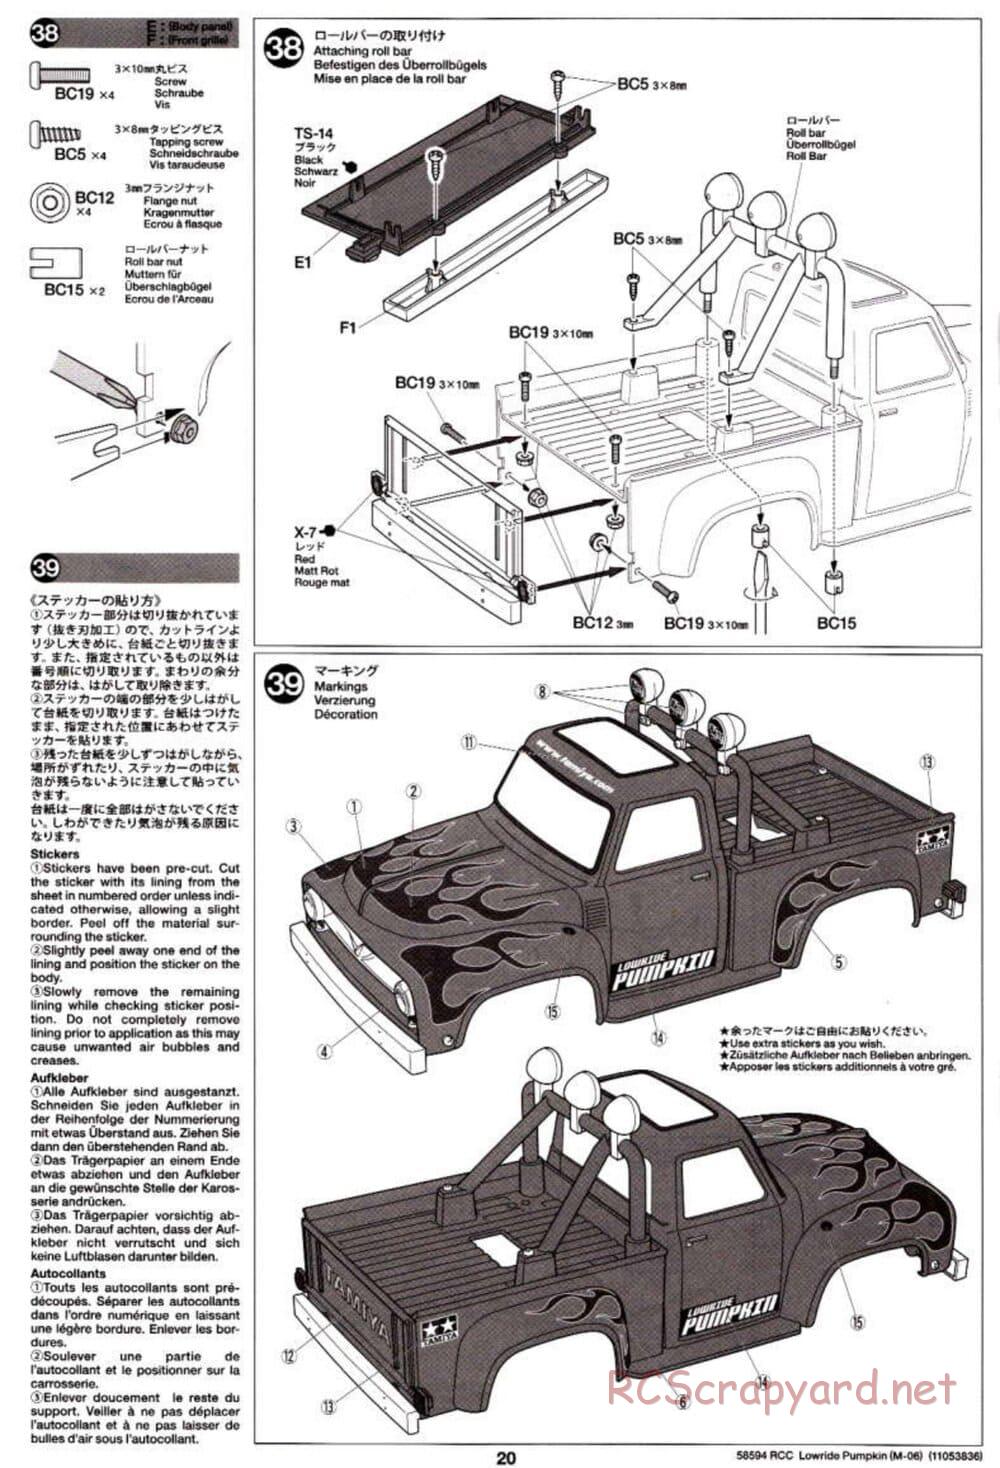 Tamiya - Lowride Pumpkin - M-06 Chassis - Manual - Page 20